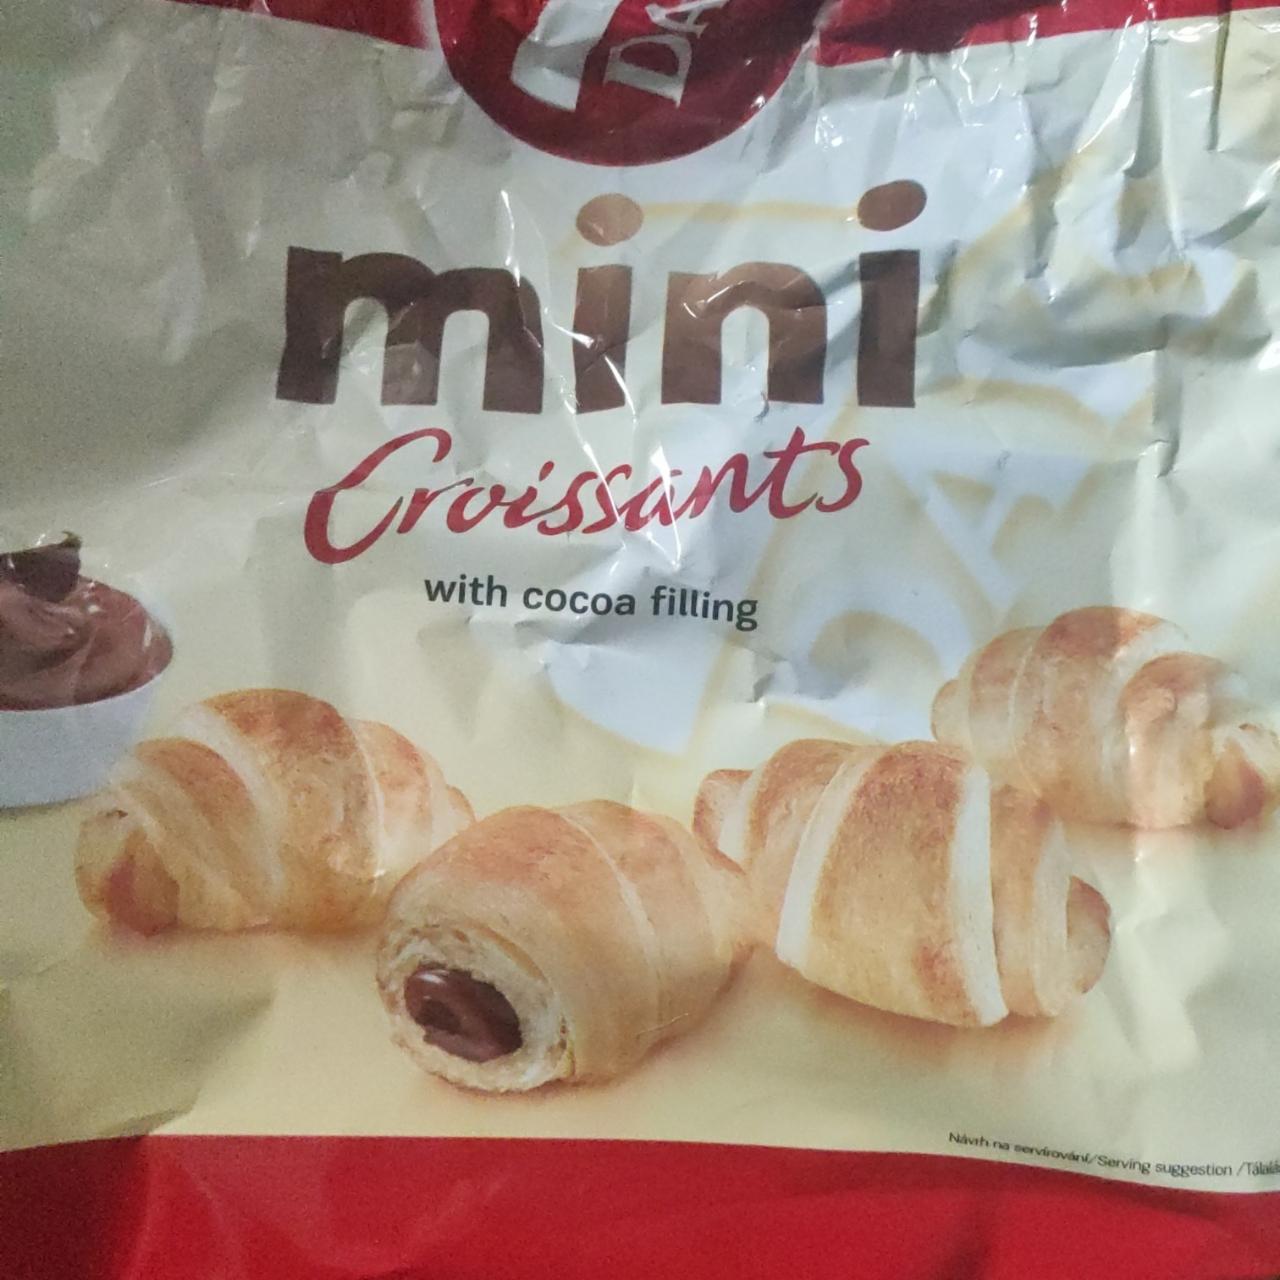 Fotografie - Mini croissants with cocoa filling 7Days